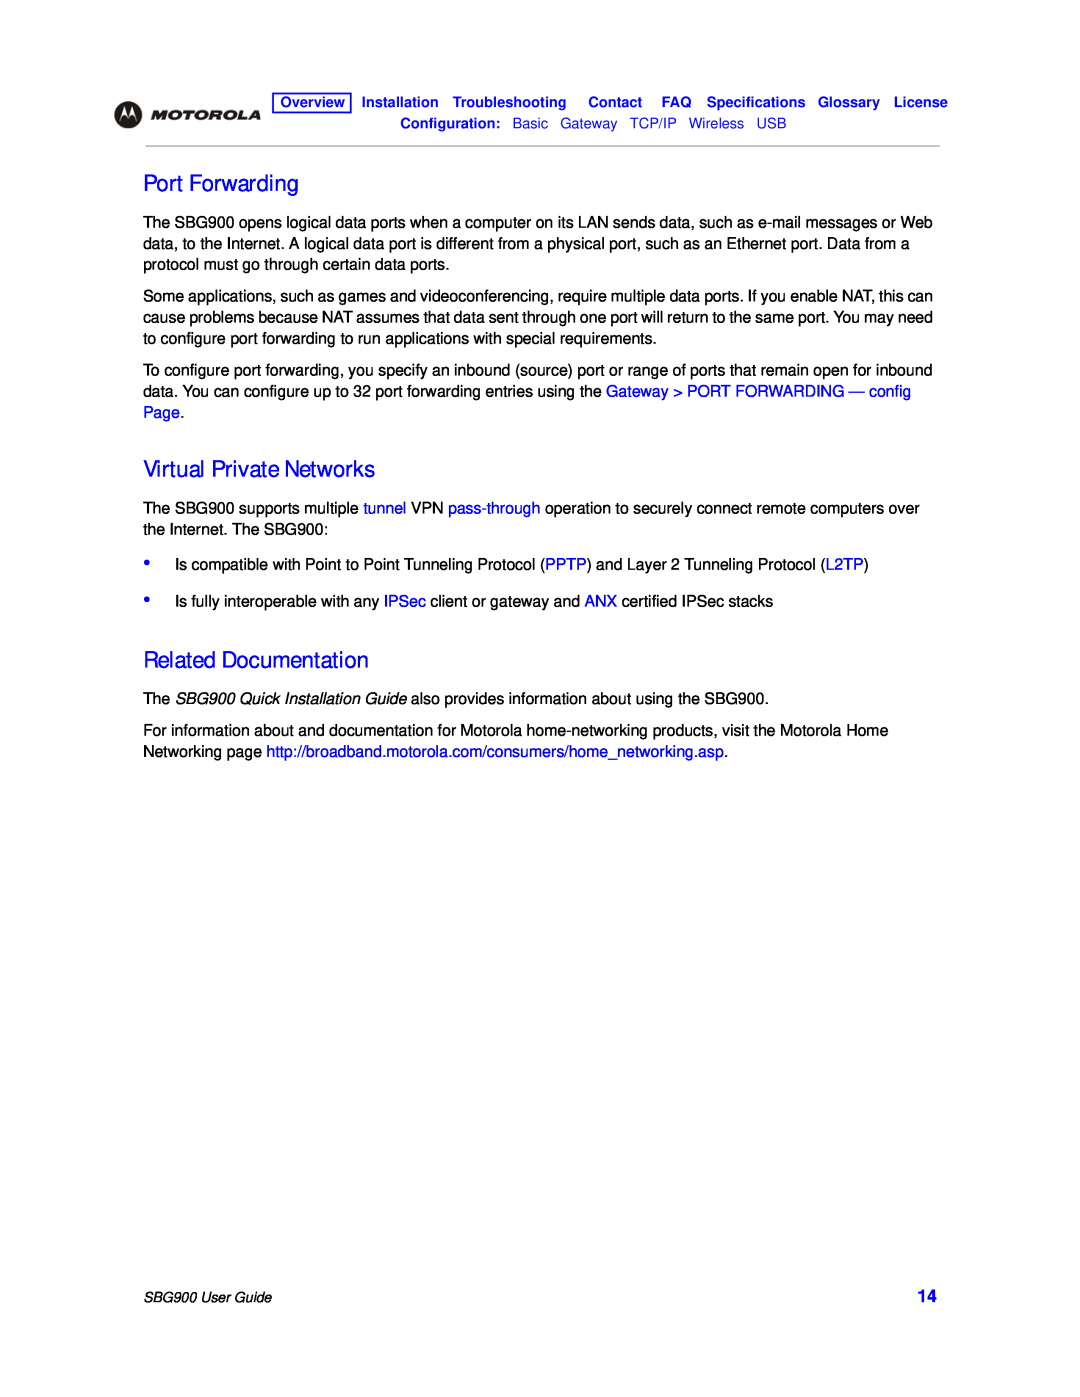 Motorola SBG900 manual Port Forwarding, Virtual Private Networks, Related Documentation 